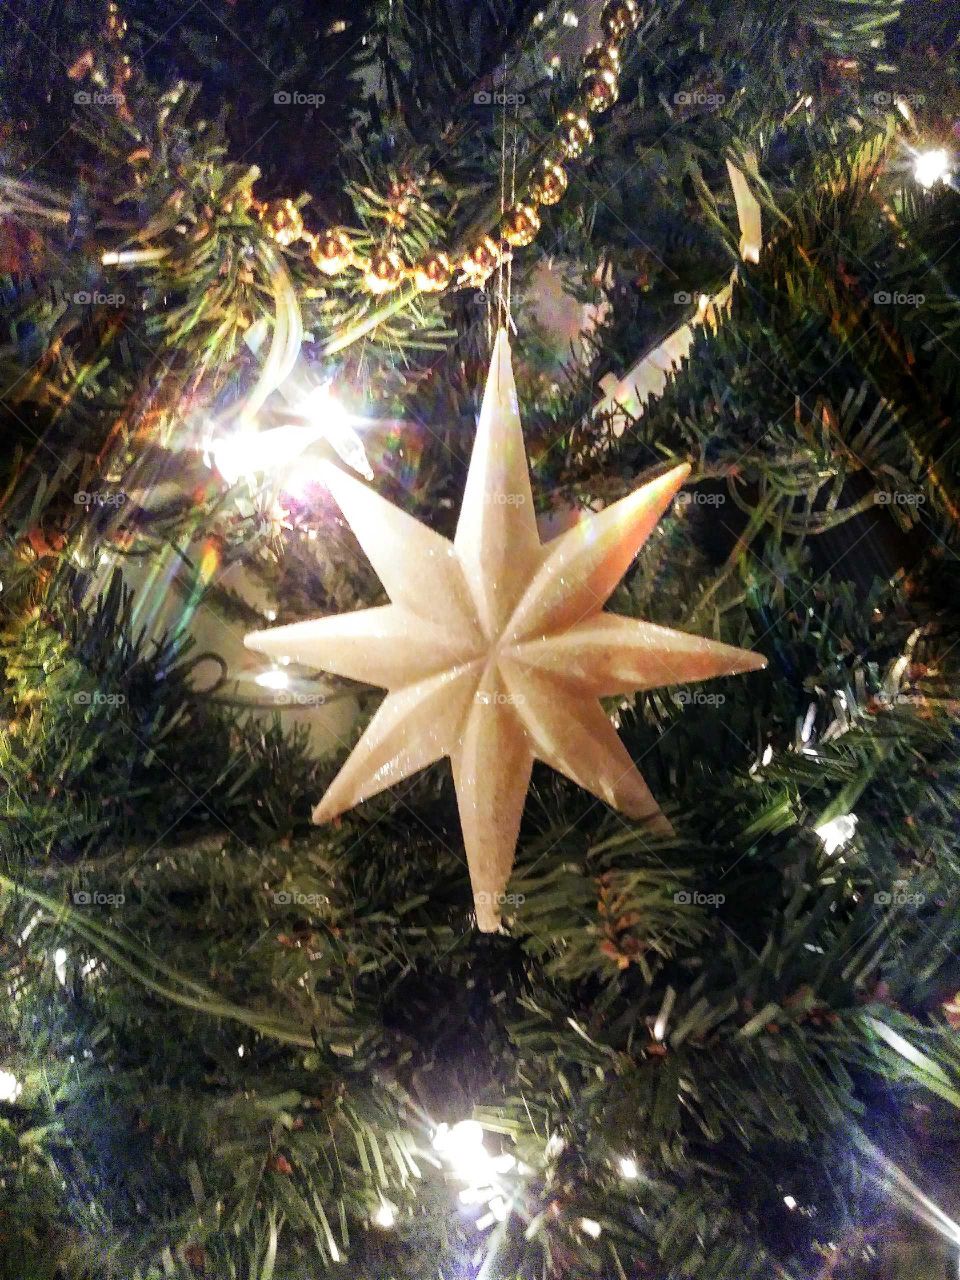 Start ornament on Christmas Tree